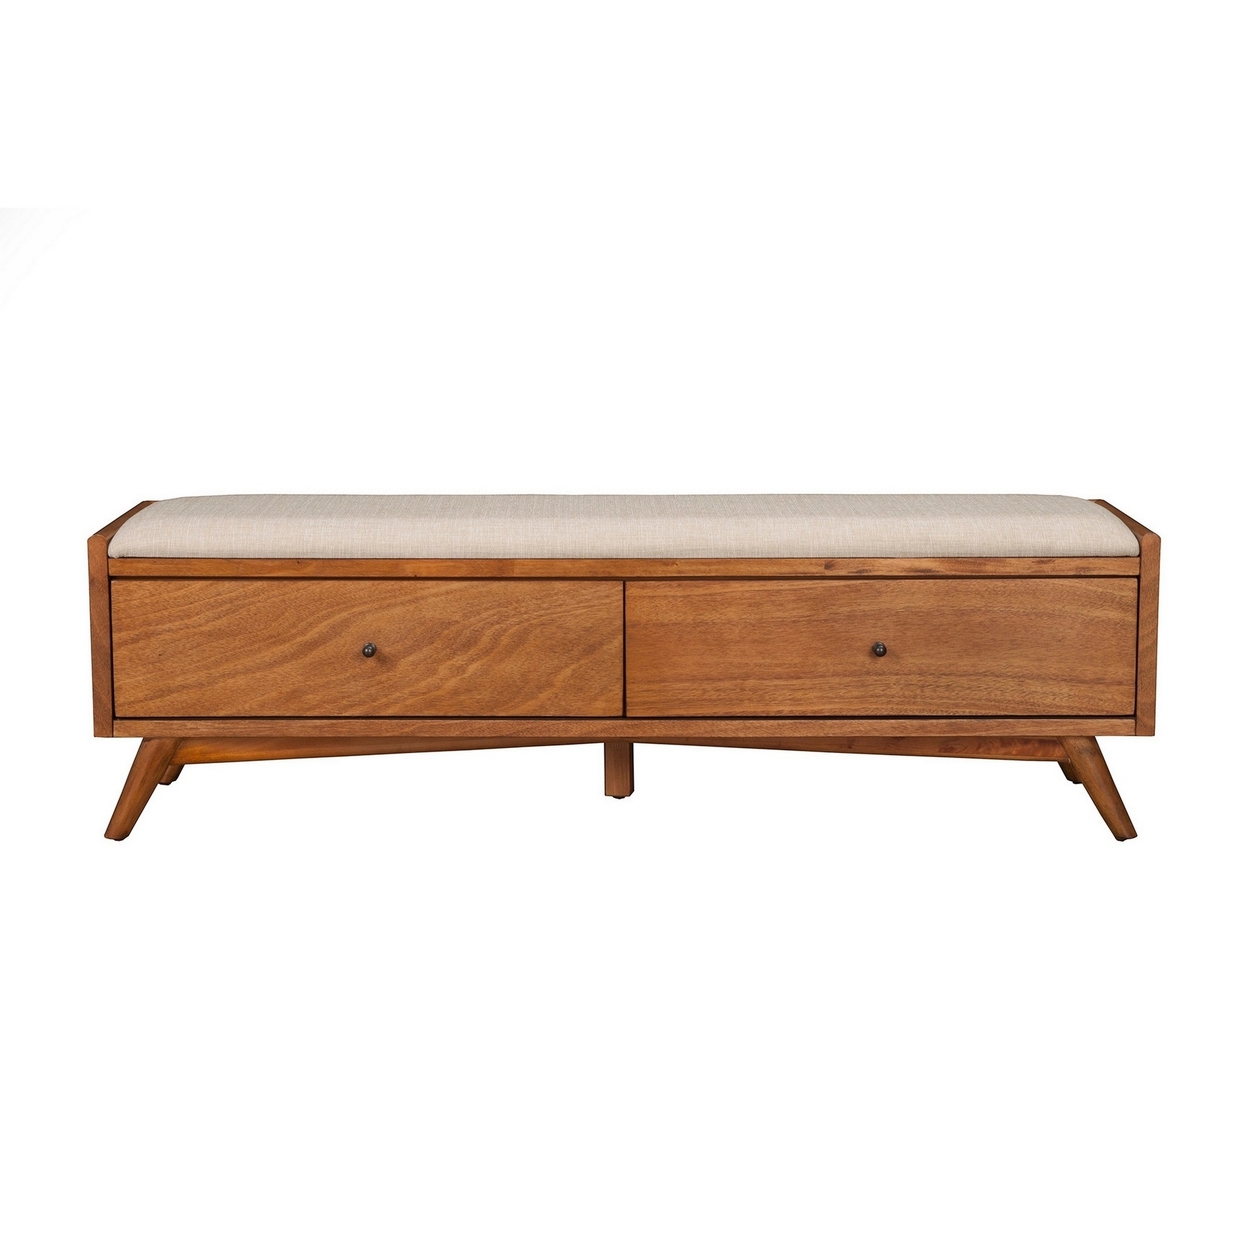 Ian 59 Inch 2 Drawer Storage Bench, Padded Seat, Beige Fabric, Acorn Brown- Saltoro Sherpi